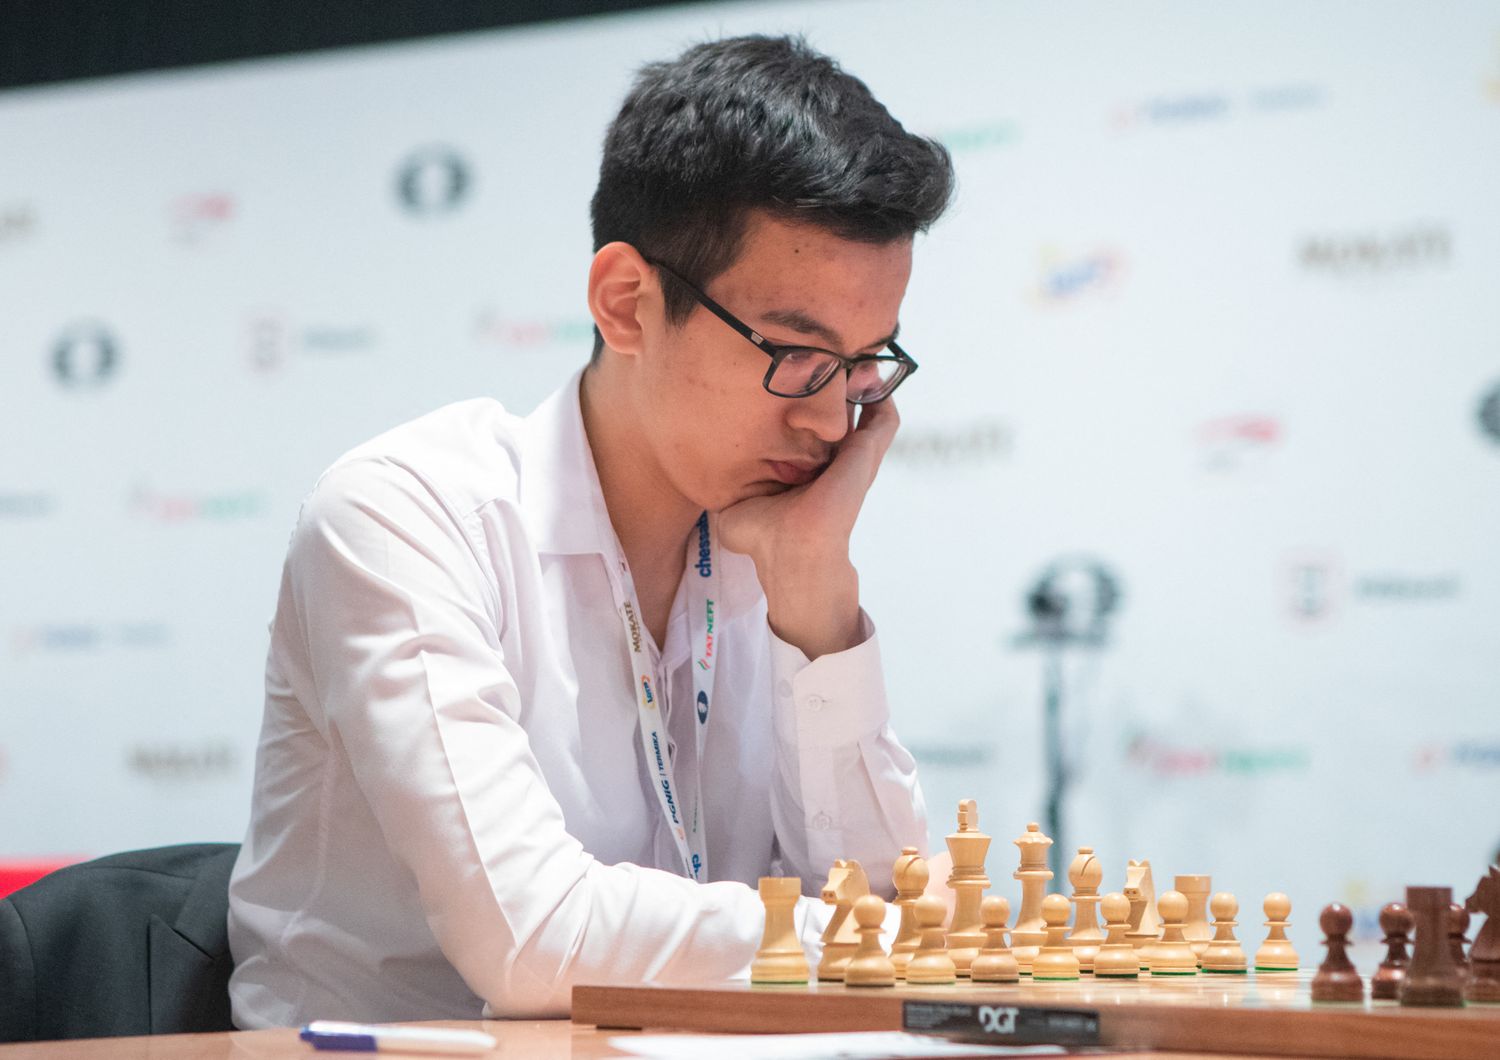 Abdusattorov, campione uzbeko di scacchi